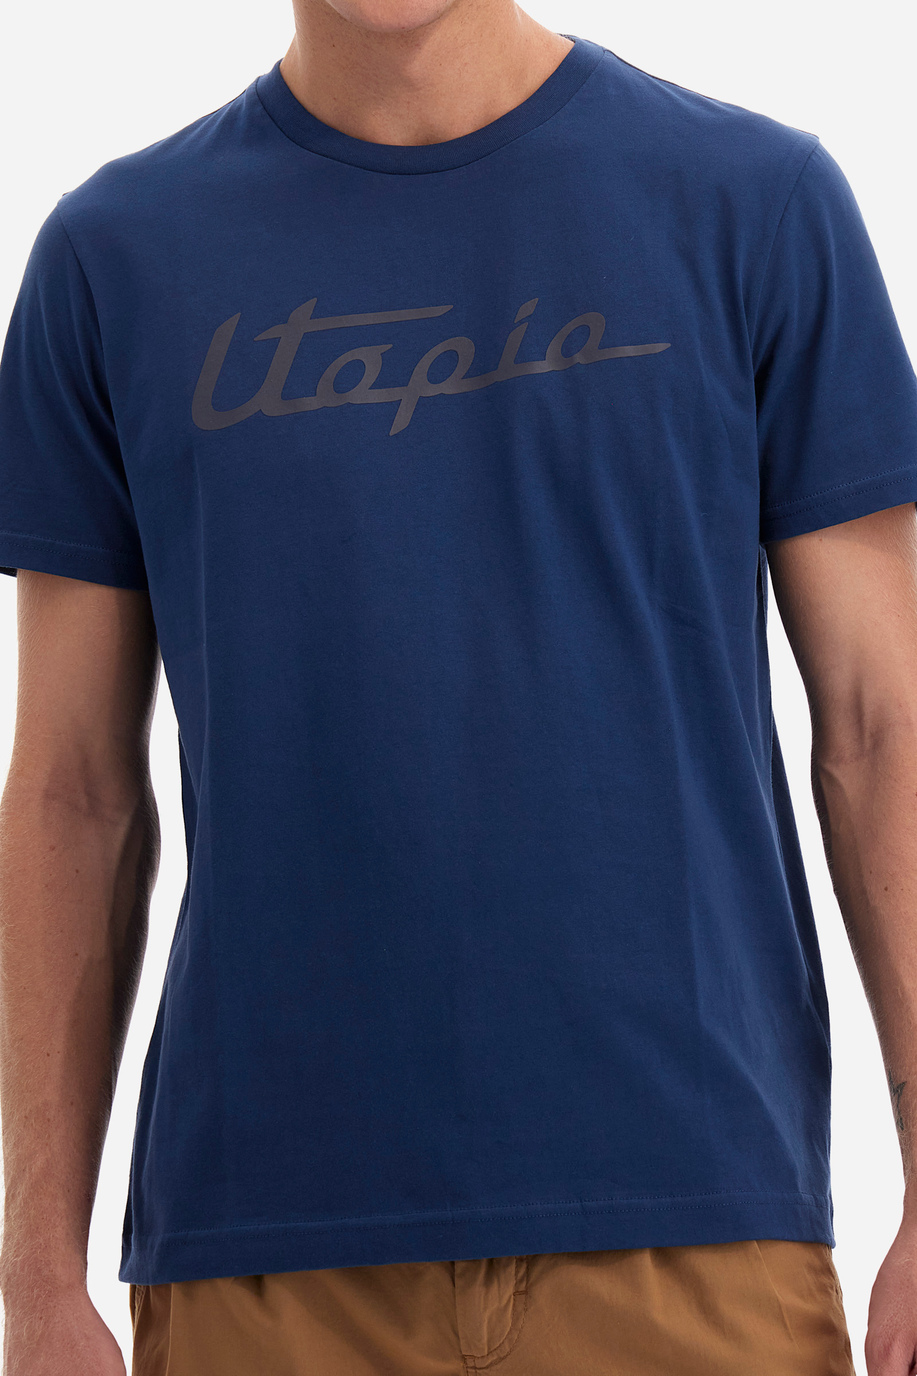 T-shirt regular fit in cotone - Yongsun - Pagani by La Martina | La Martina - Official Online Shop